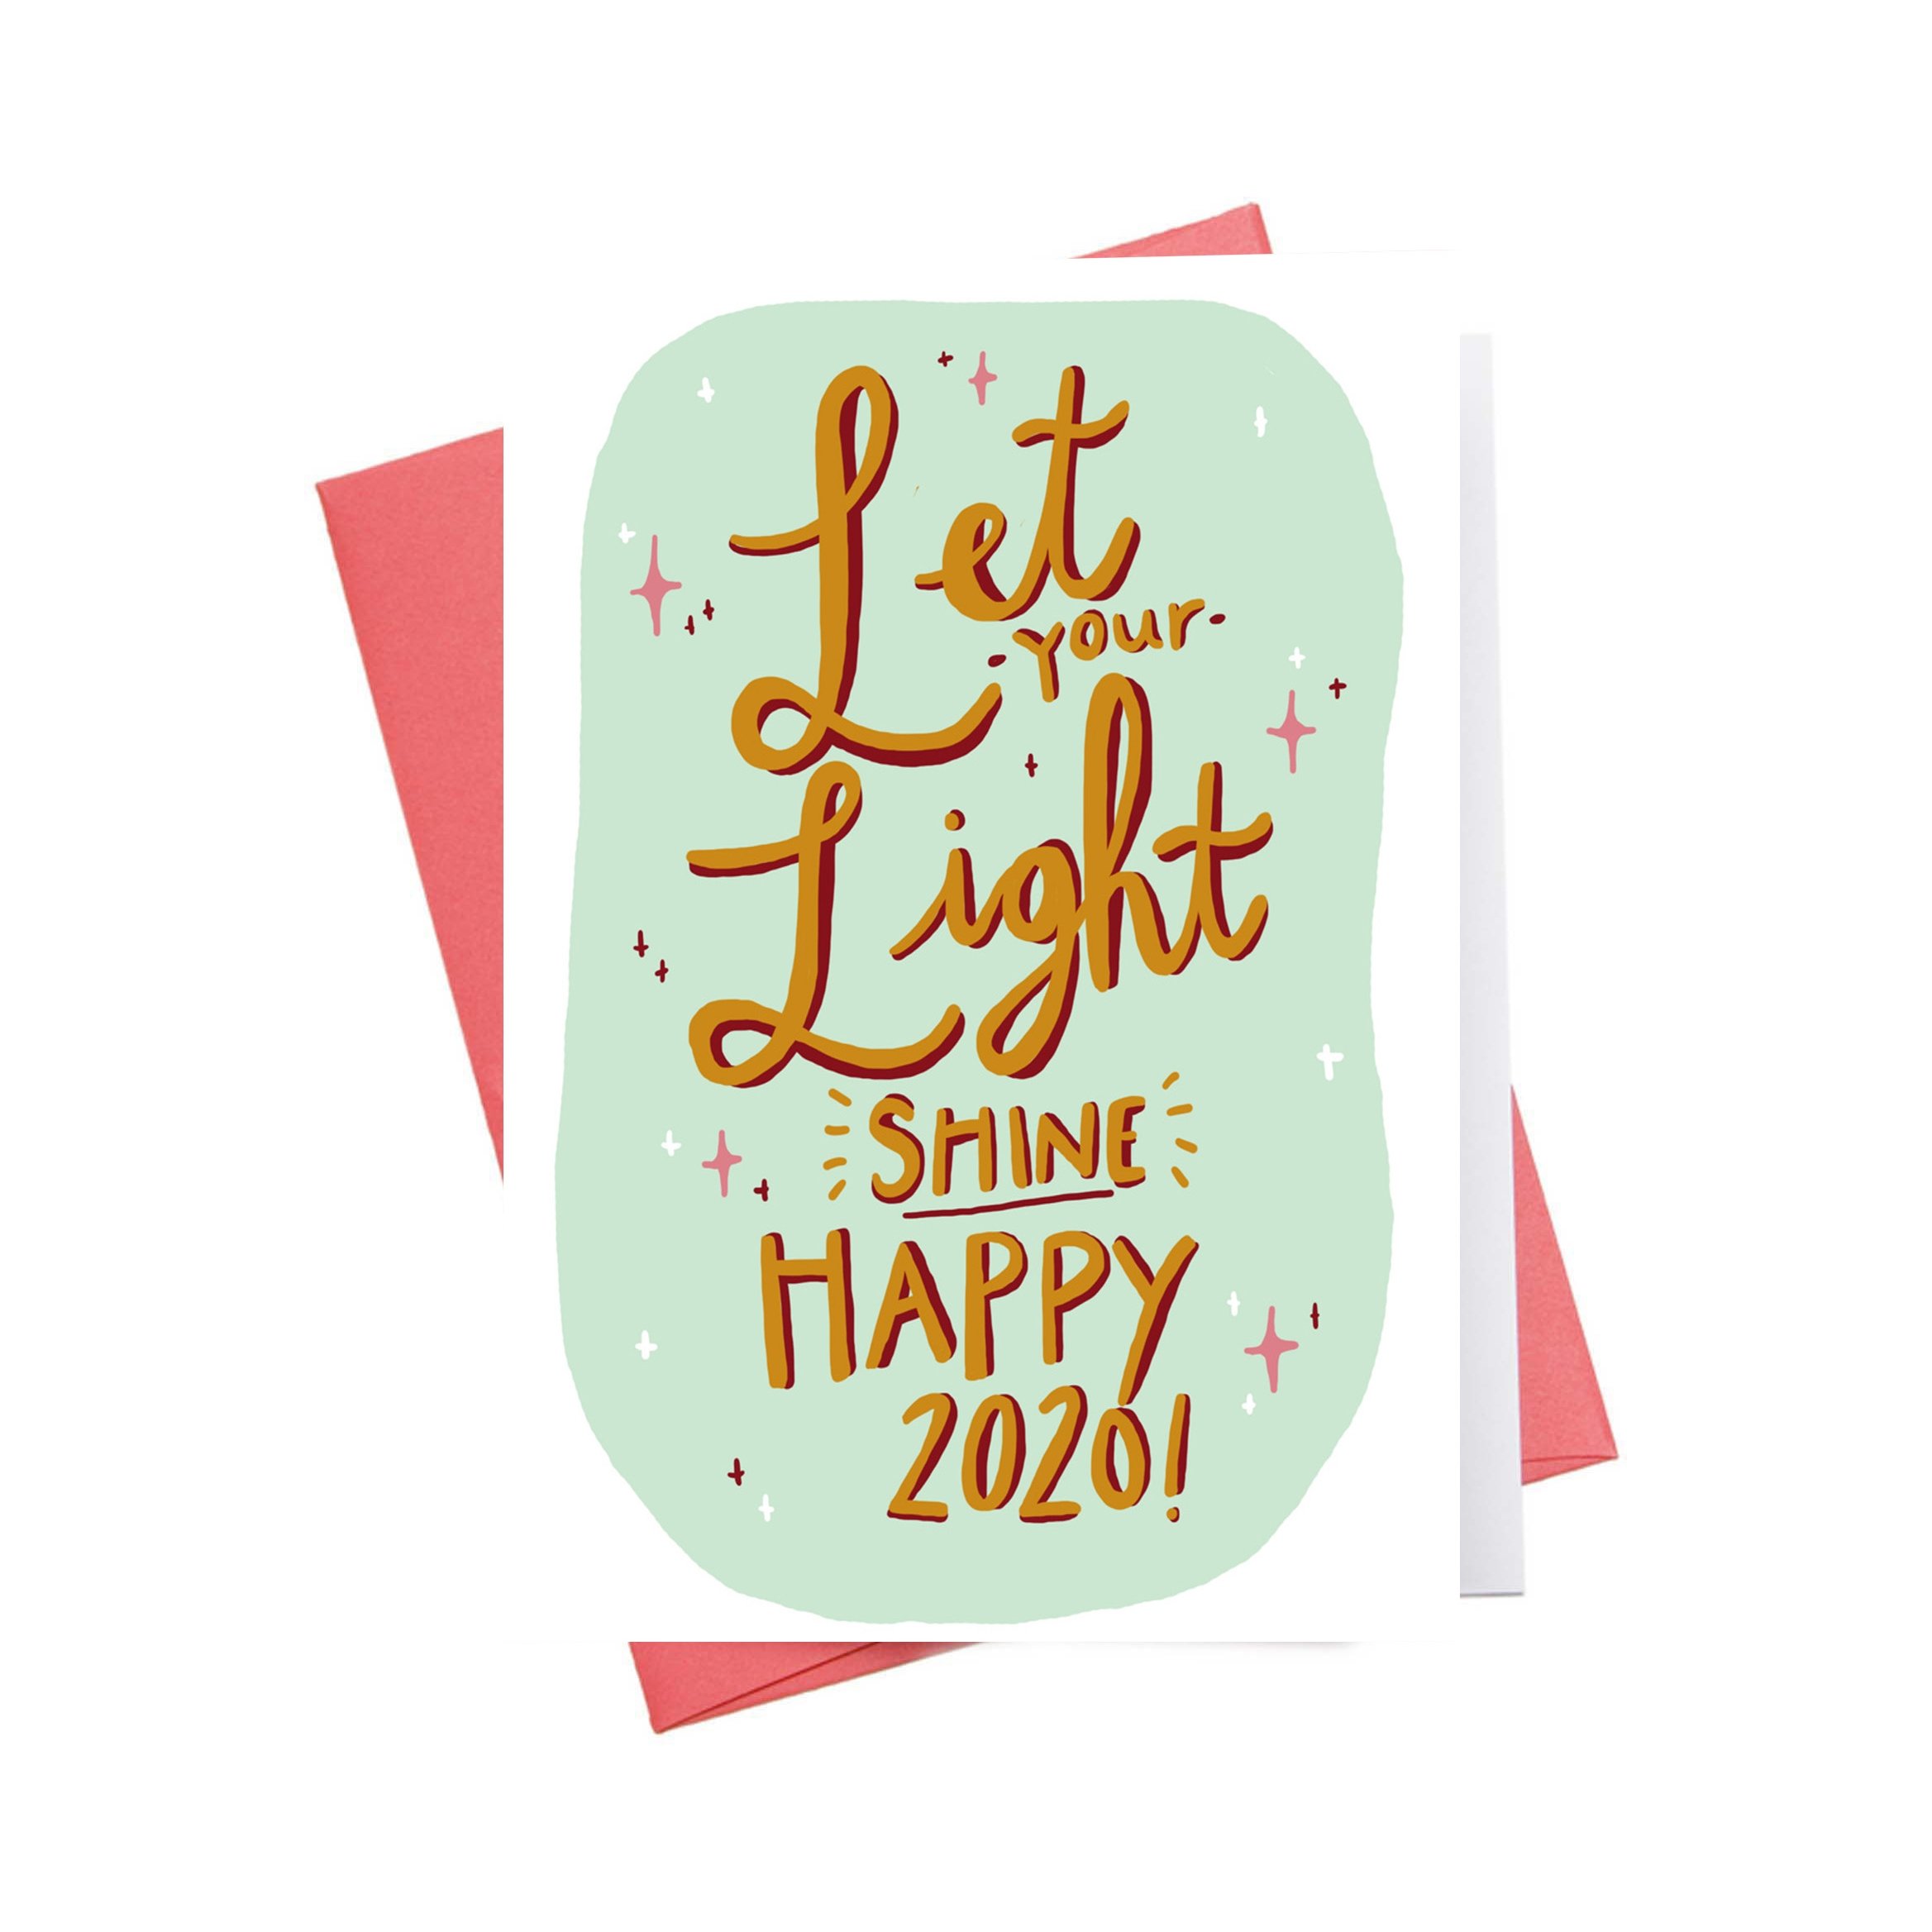 Happy 2020 New Year Greeting Card.jpeg